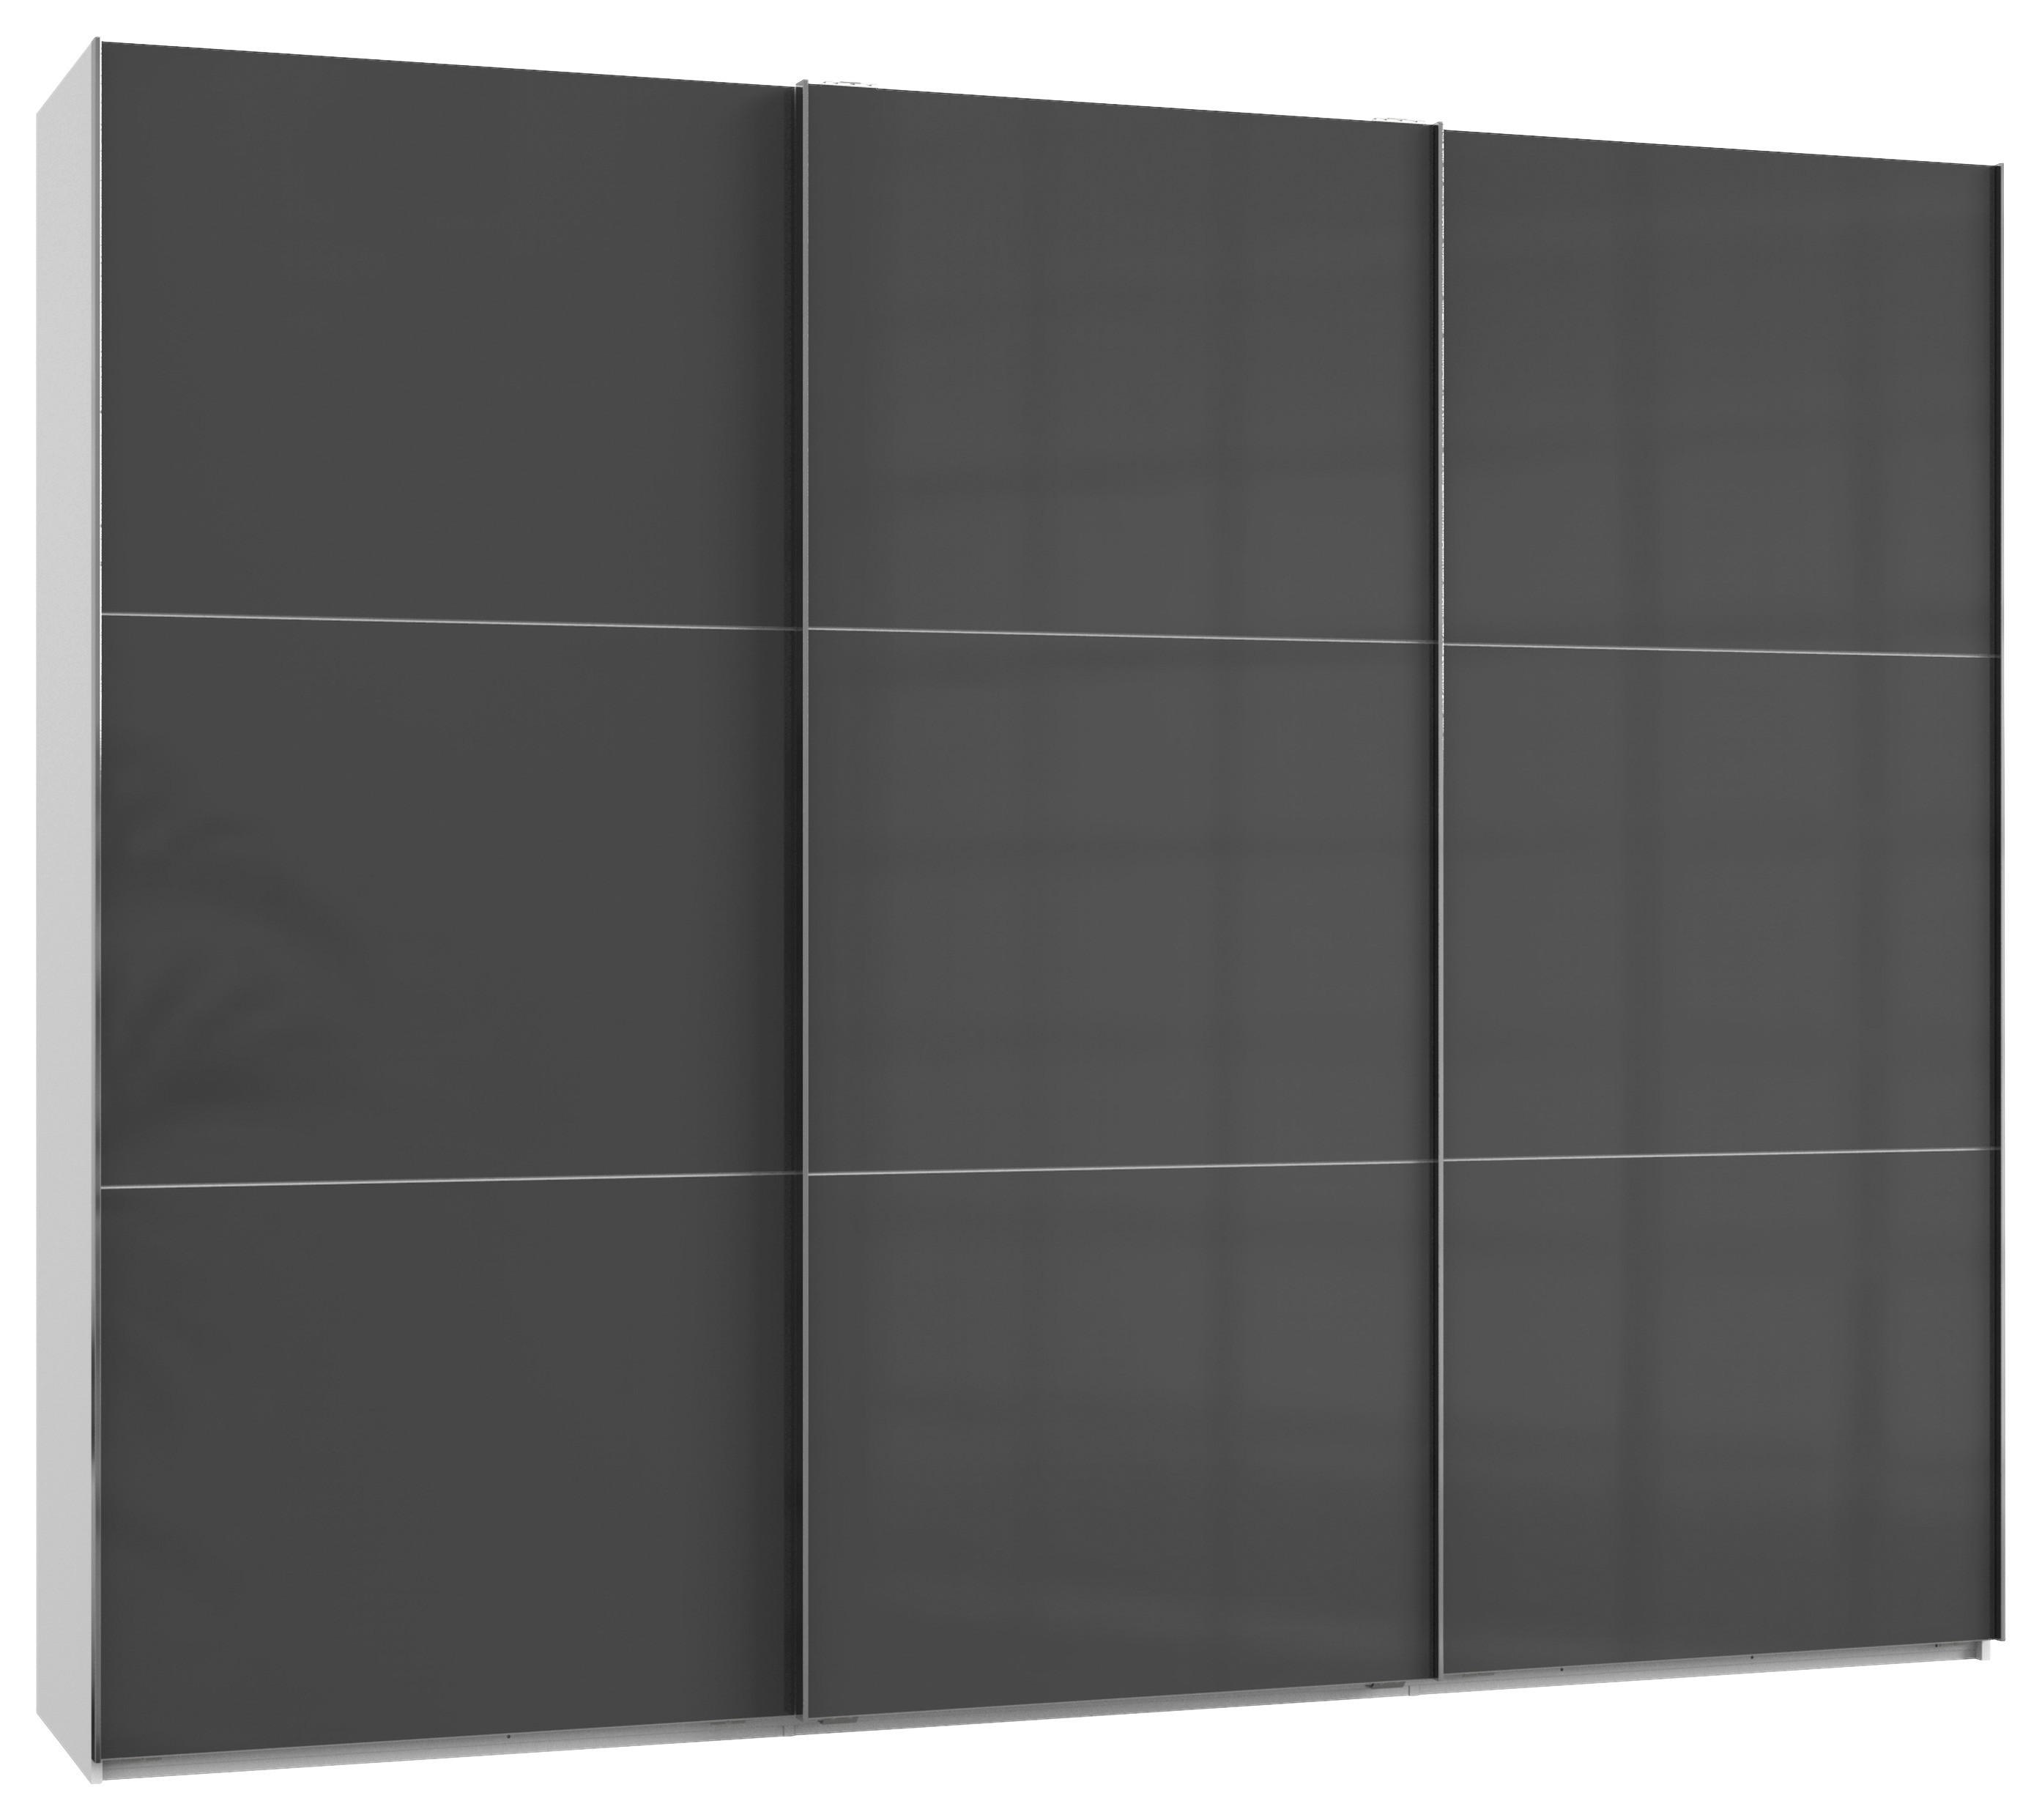 SCHWEBETÜRENSCHRANK 3-türig Grau, Weiß  - Chromfarben/Weiß, MODERN (300/236/65cm) - MID.YOU